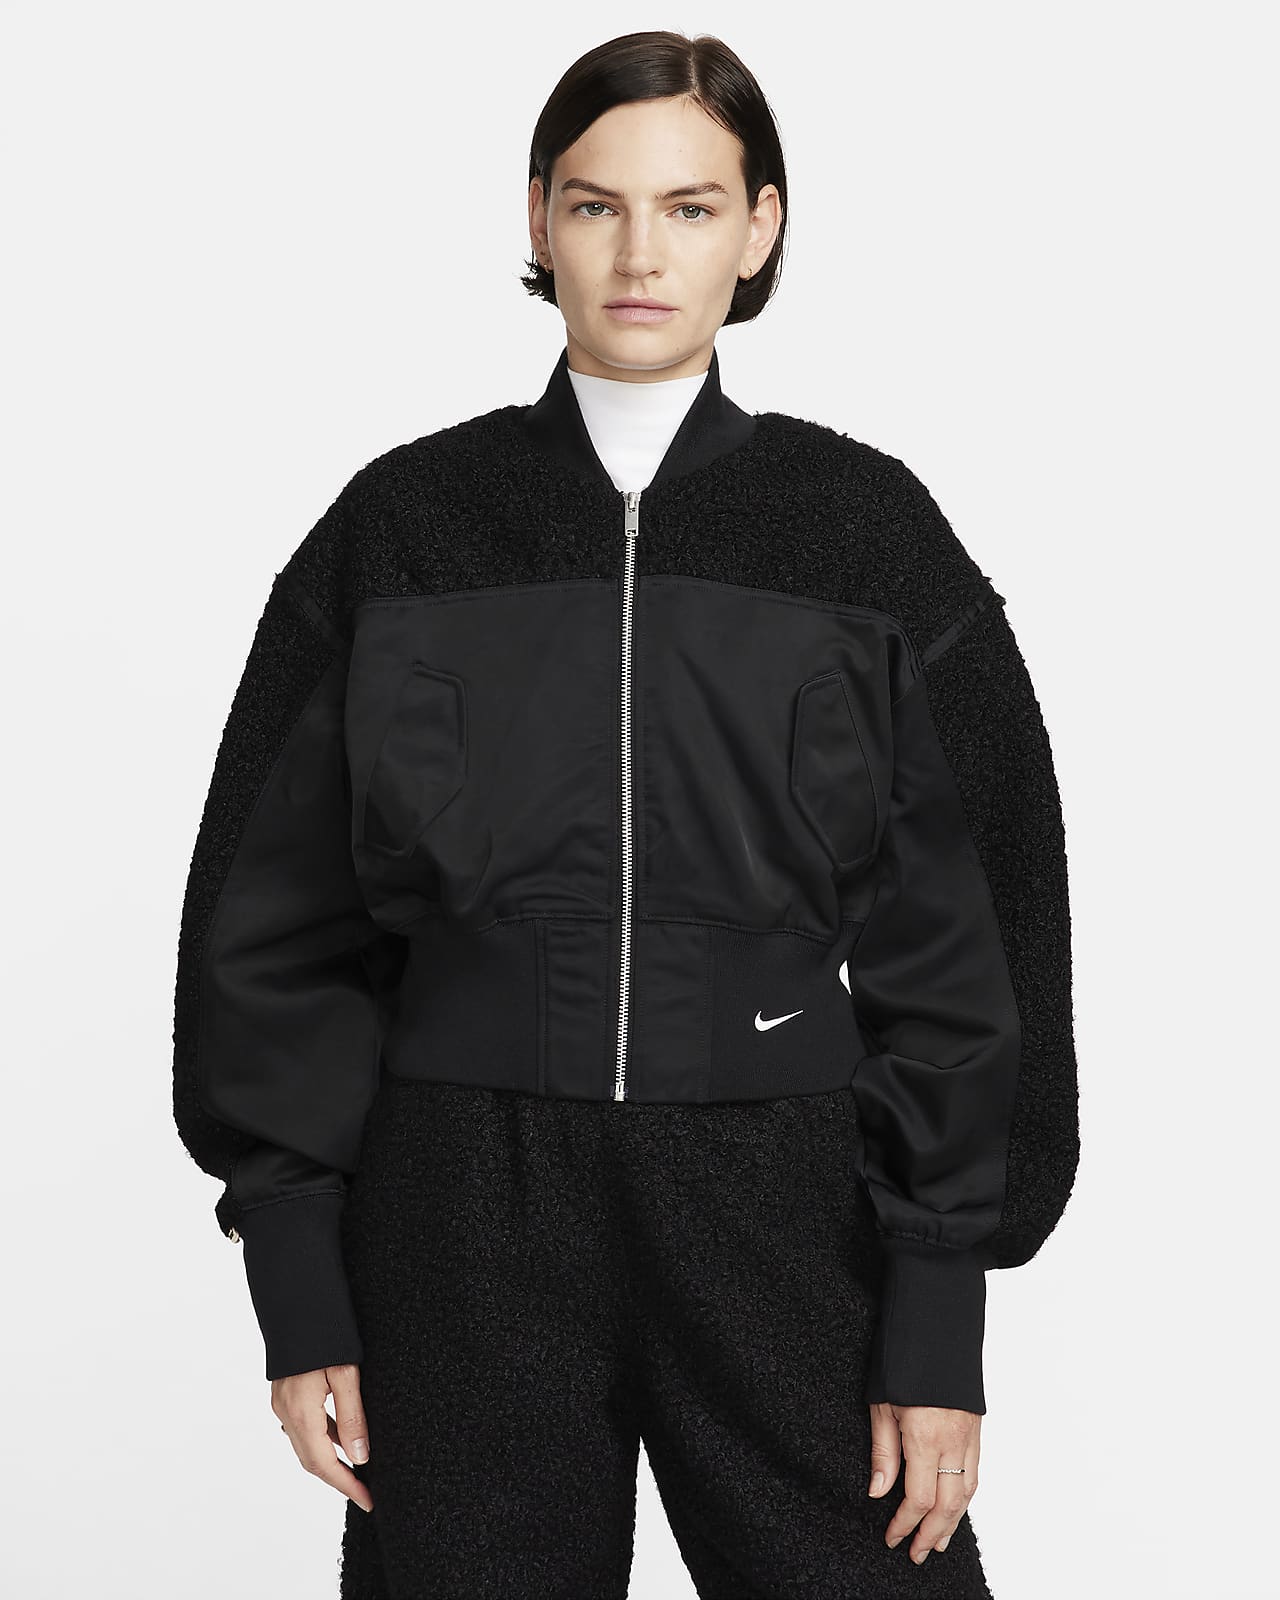 Nike Sportswear Collection Chaqueta bomber de tejido Fleece grueso - Mujer